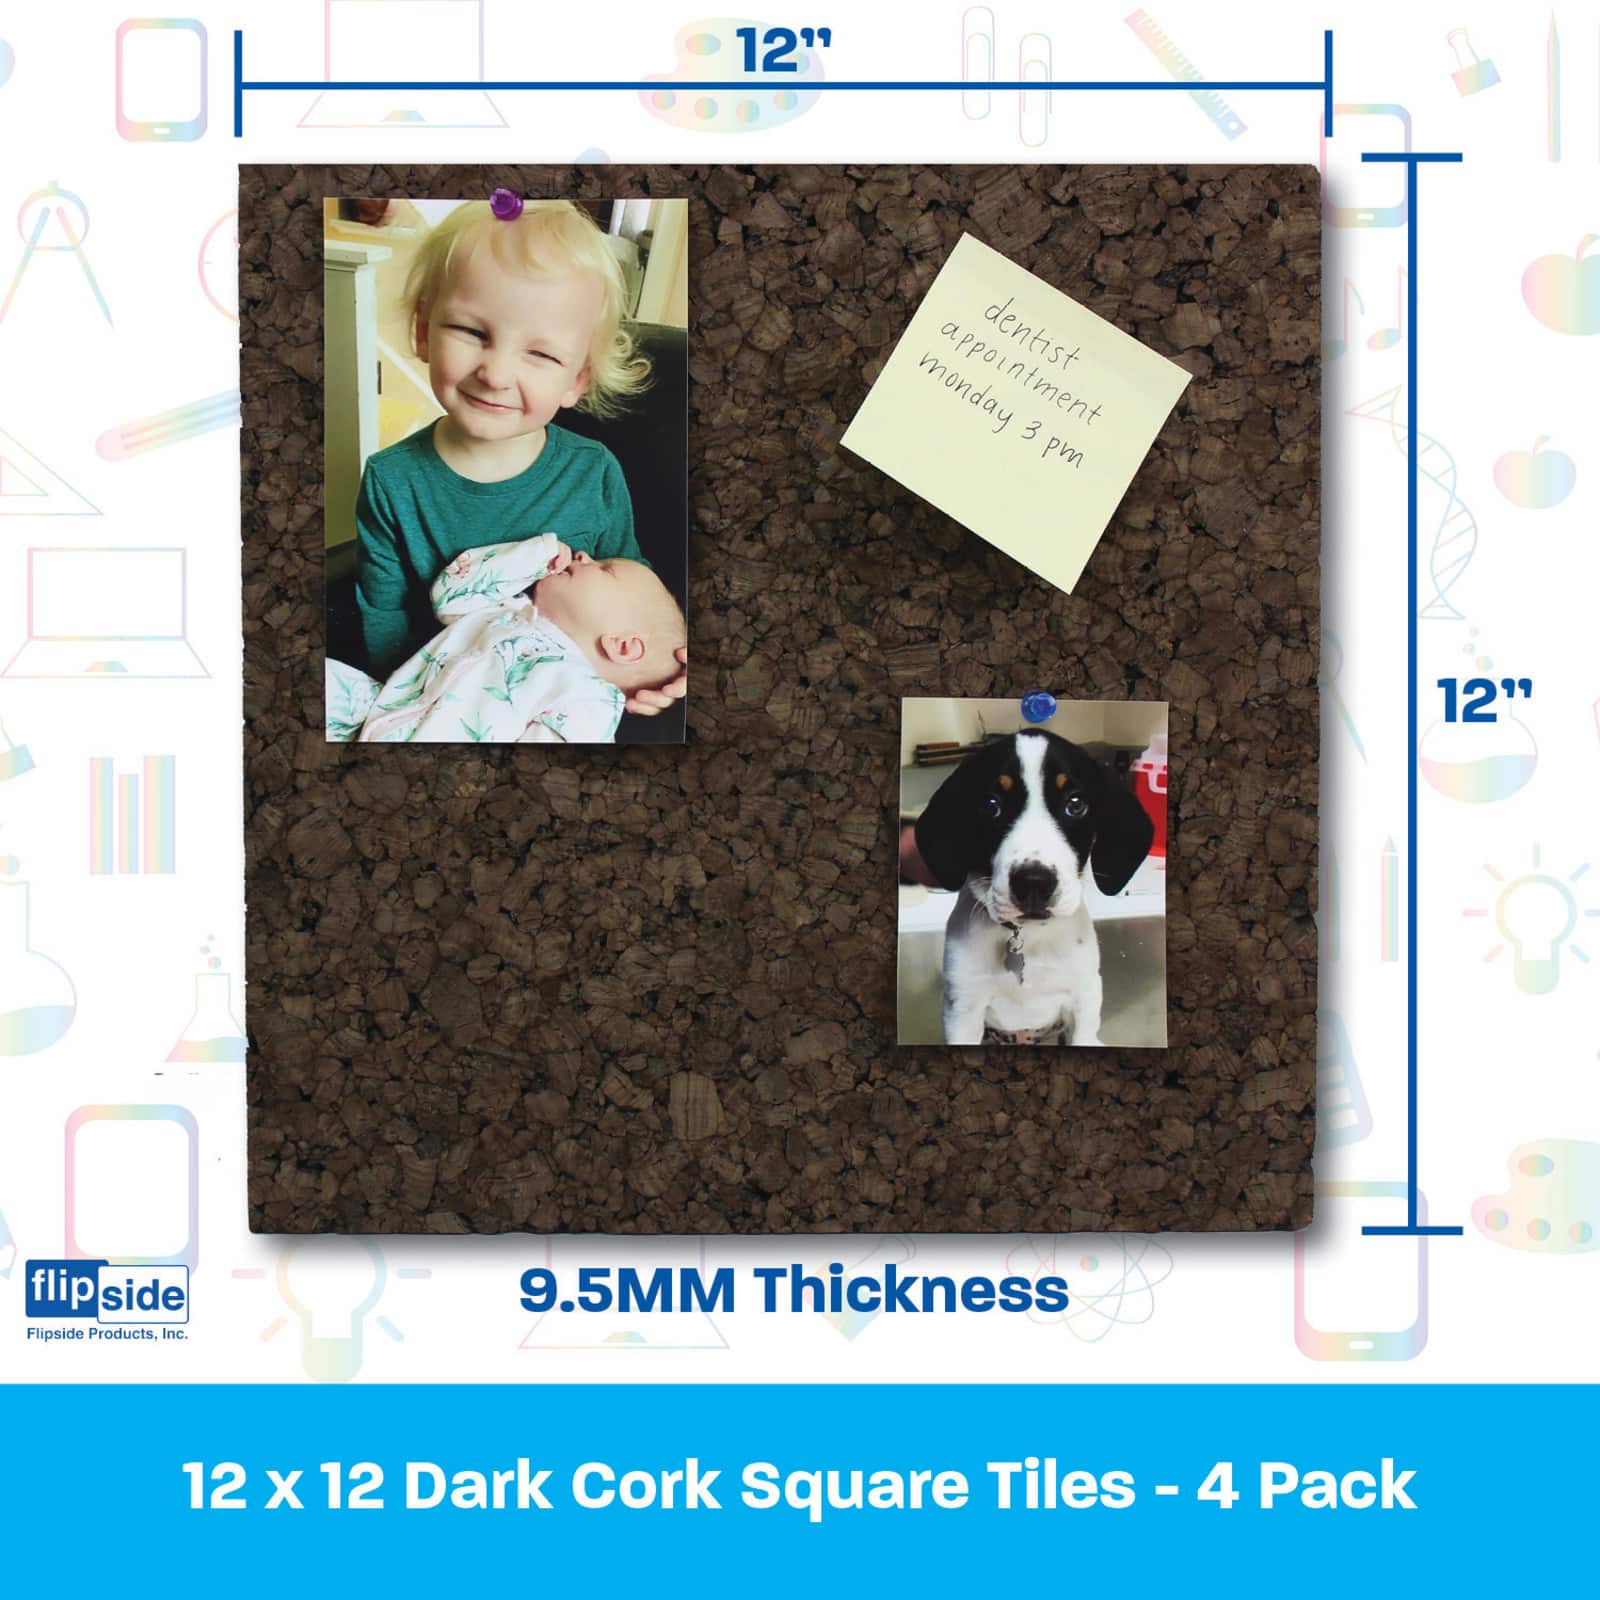 Flipside Dark Cork Tiles 12" x 12" Pack of 4 